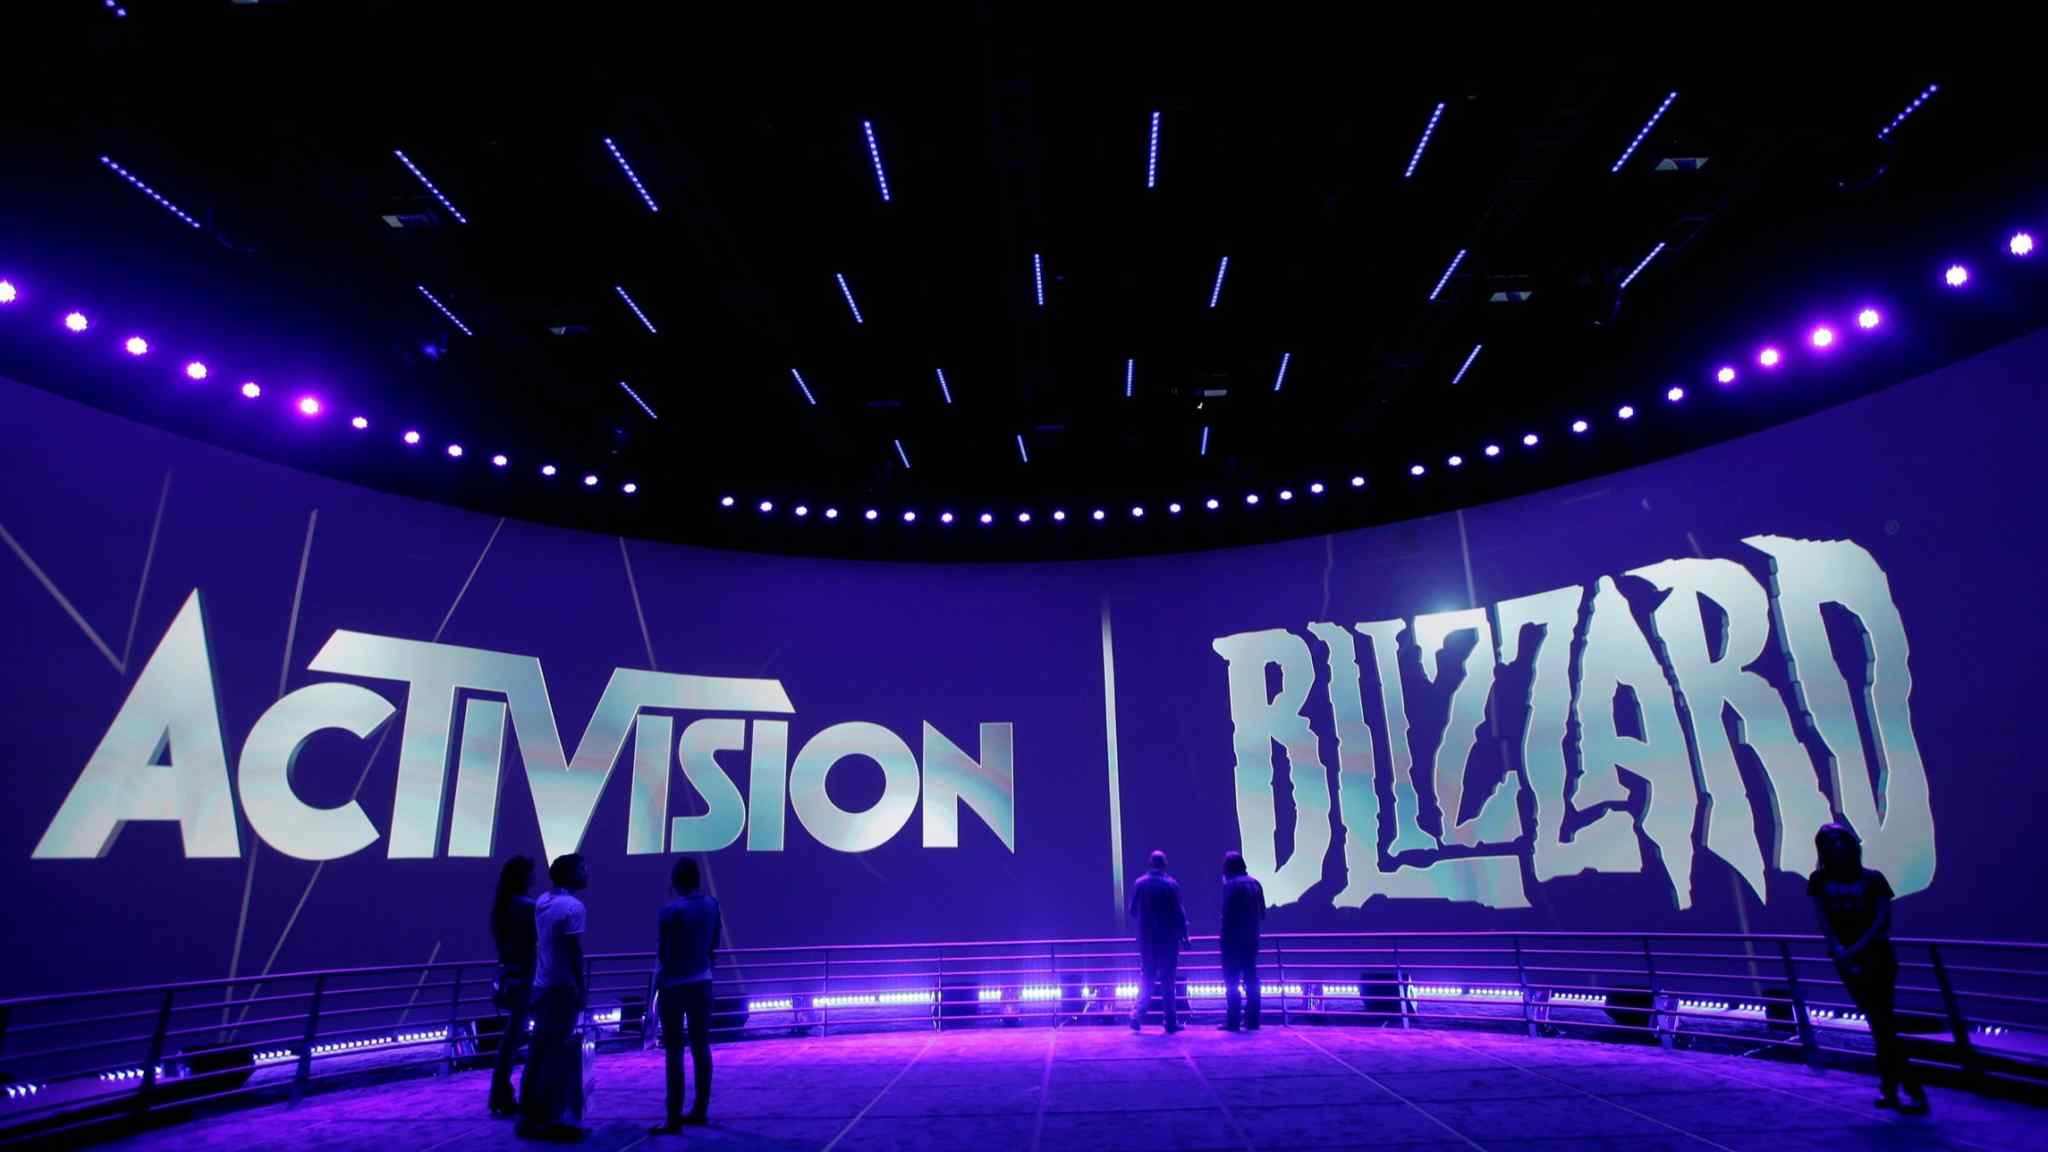 Activision Blizzard pays $35mn SEC settlement over workplace complaints